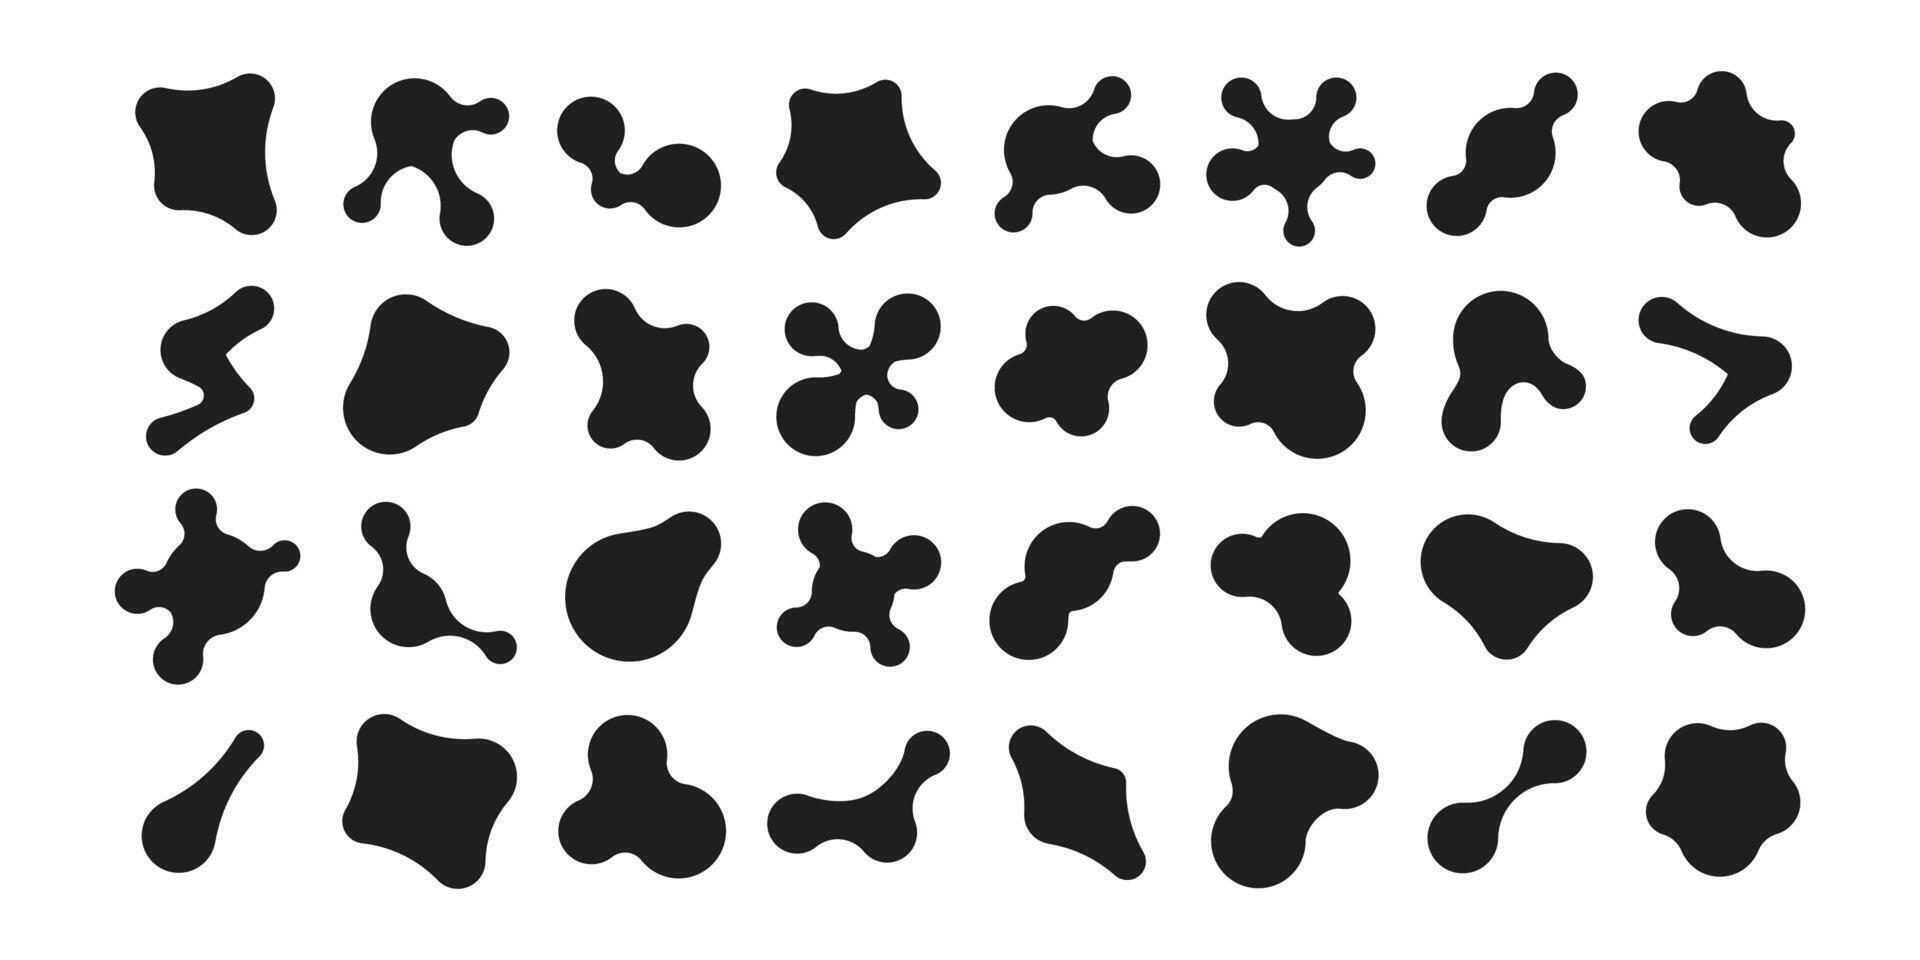 Irregular random blobs. Abstract organic blotch, inkblot and pebble silhouettes. Black illustration vector